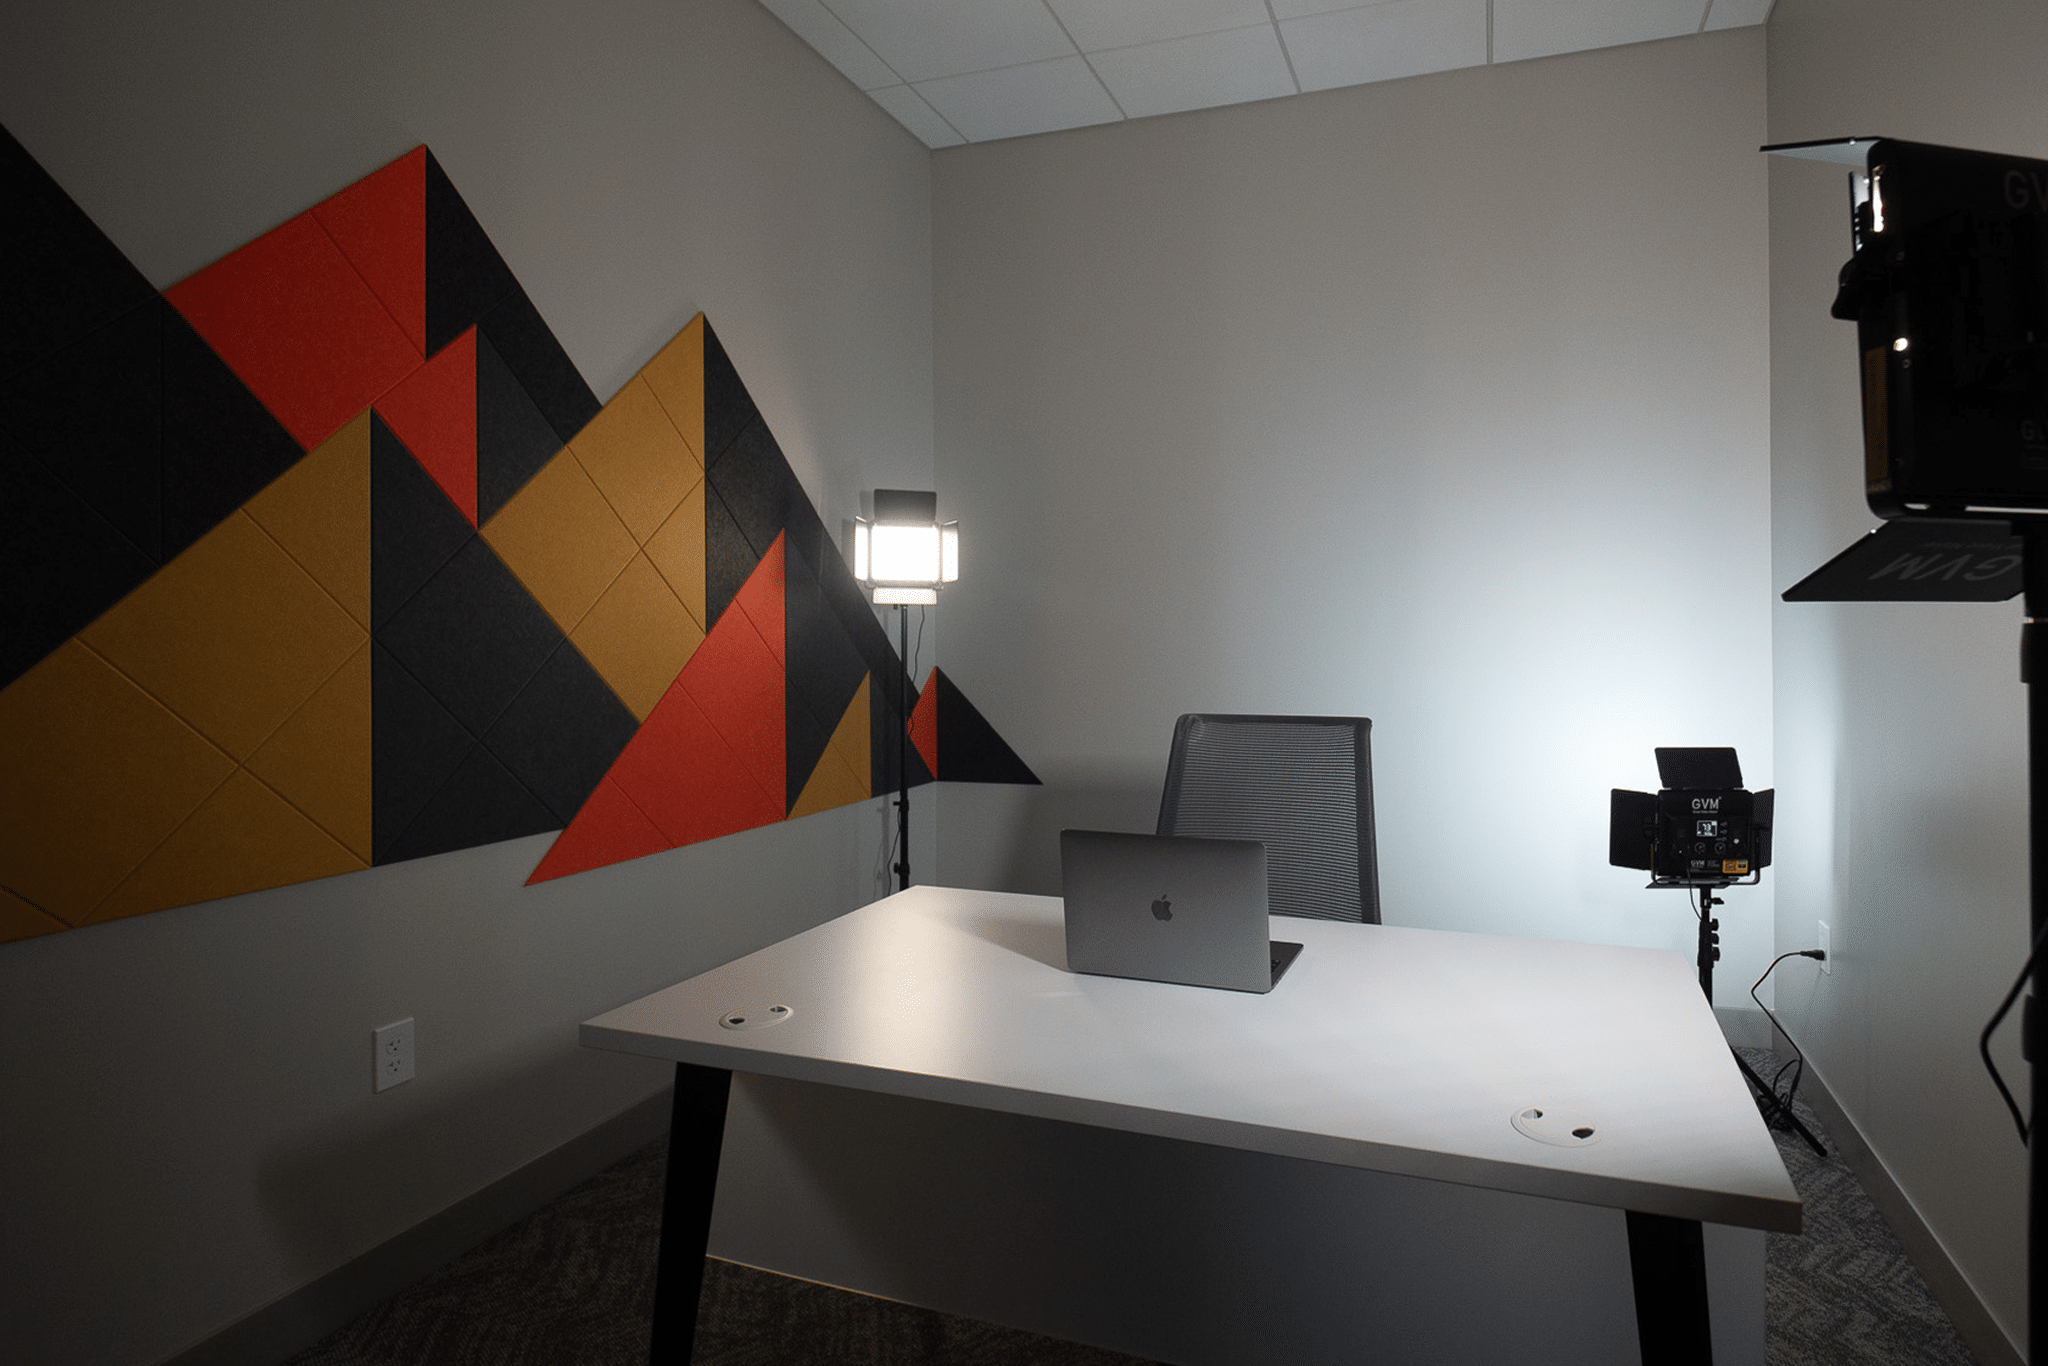 Playfair Plus Virtual Tableau Training Studio with Lights